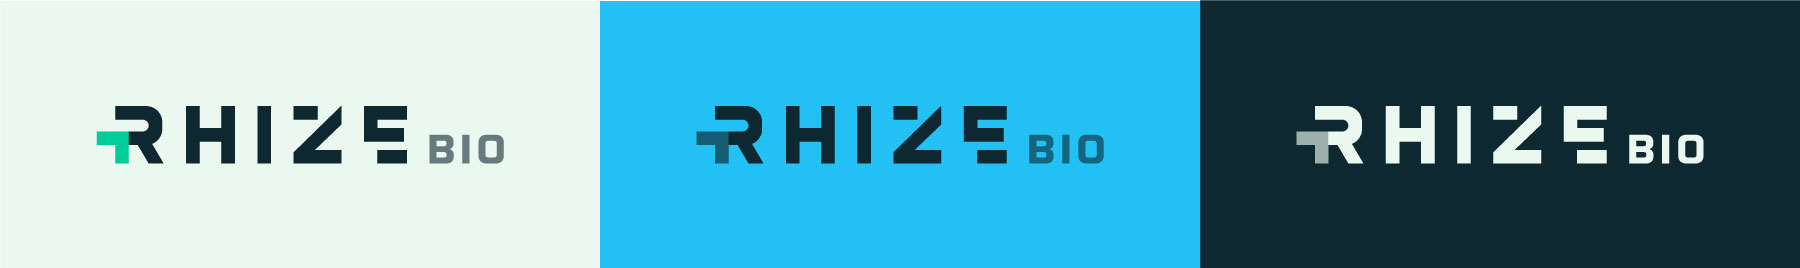 Rhize-Logos